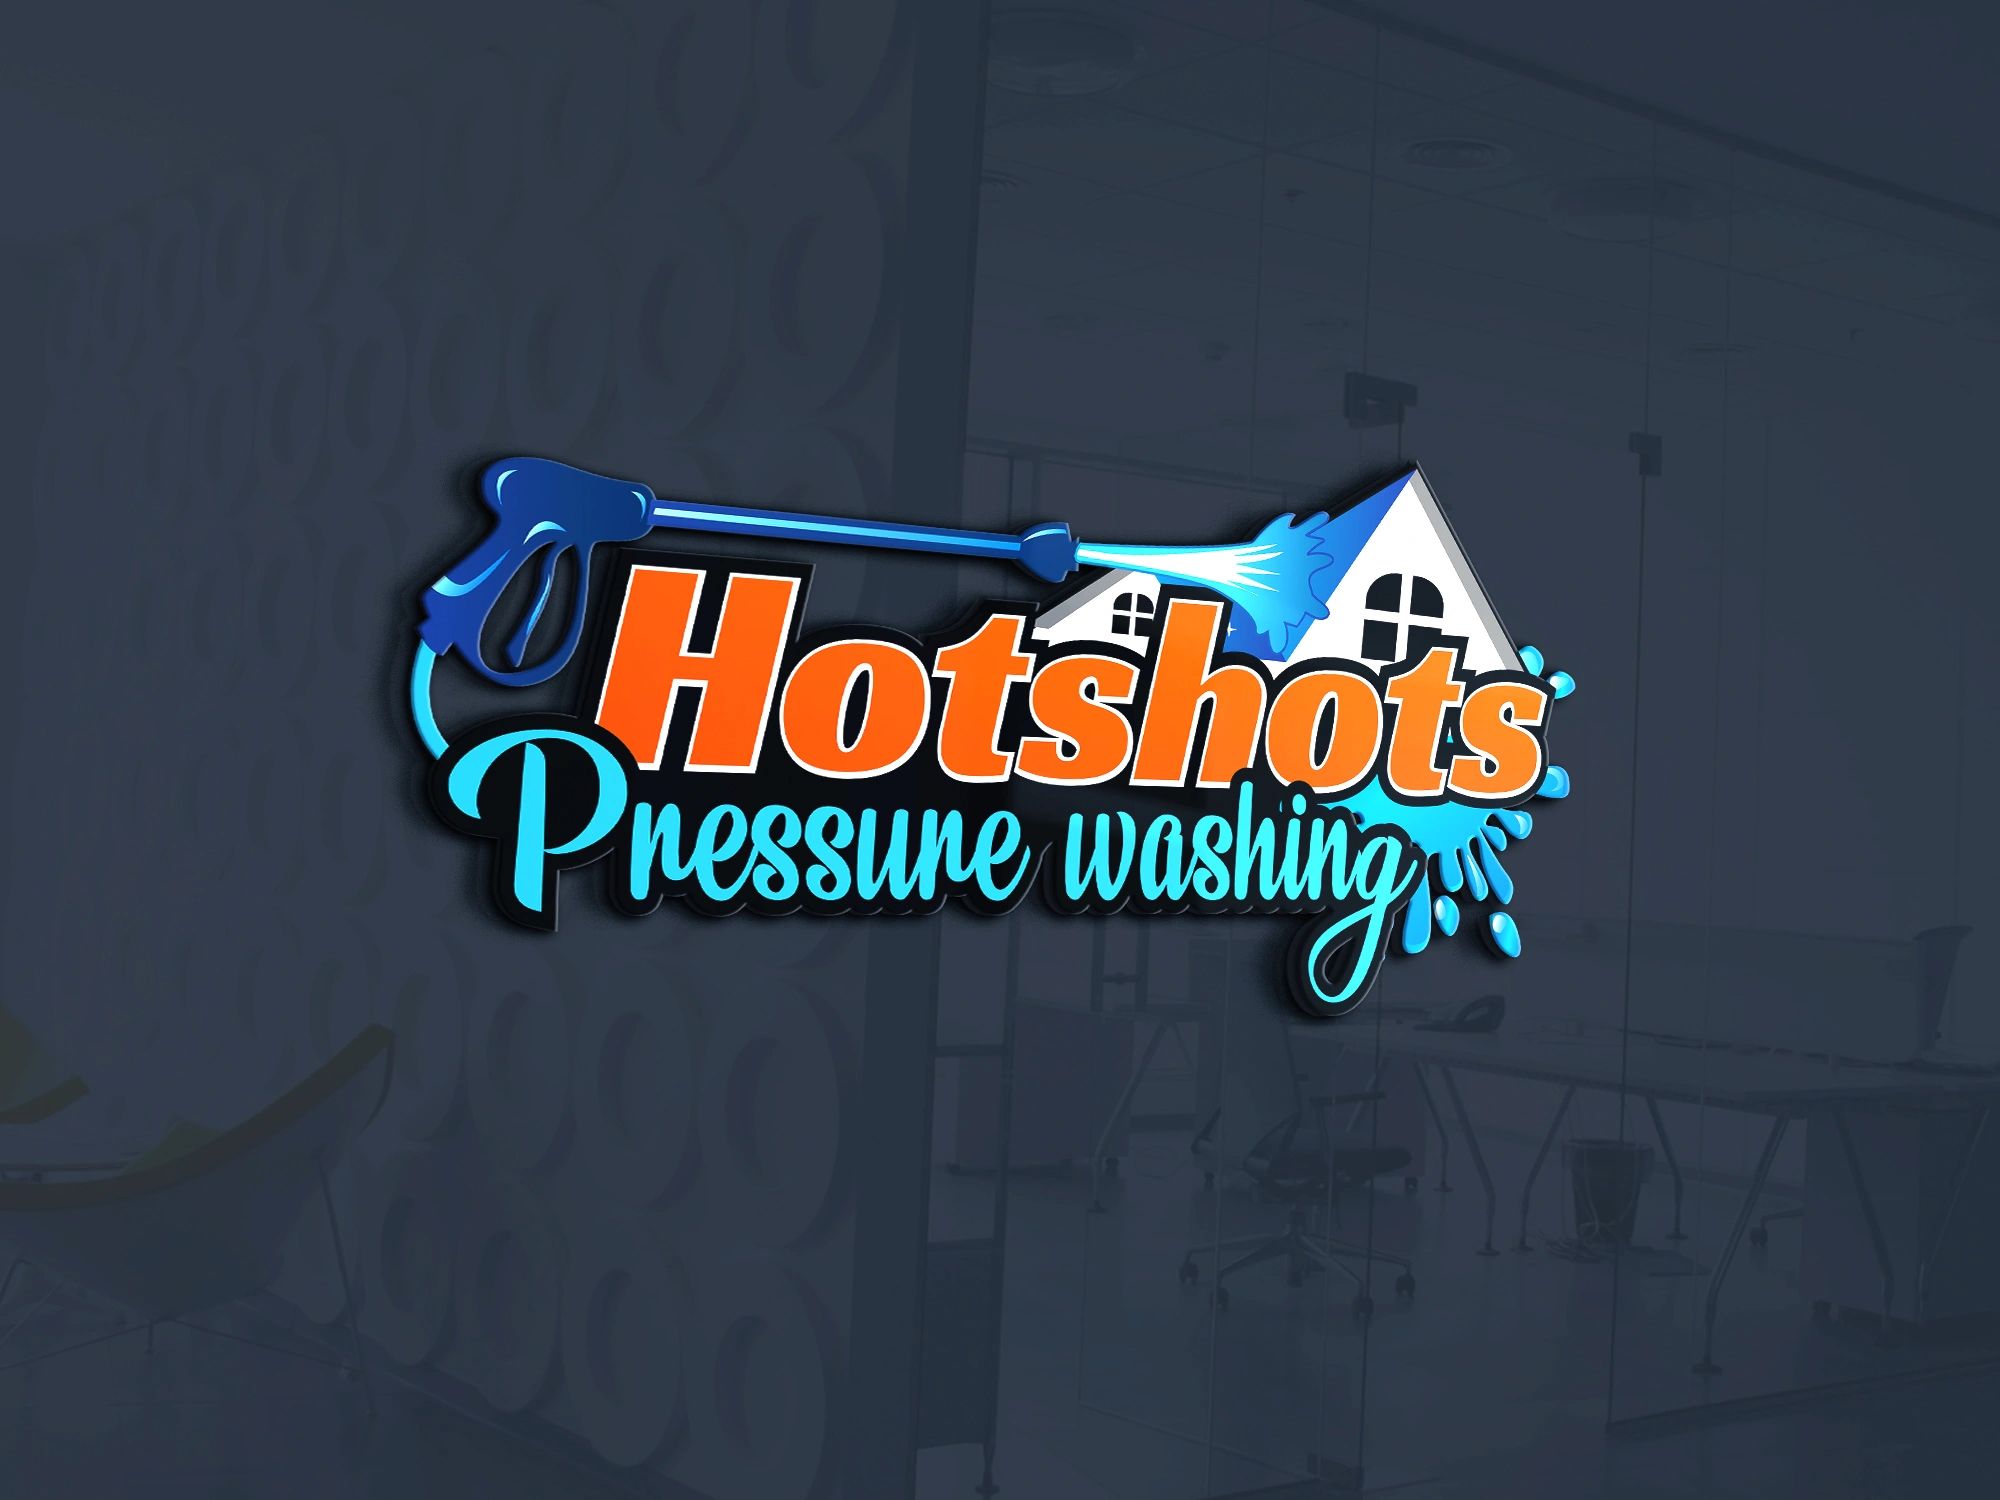 (c) Hotshots-pressurewashing.com